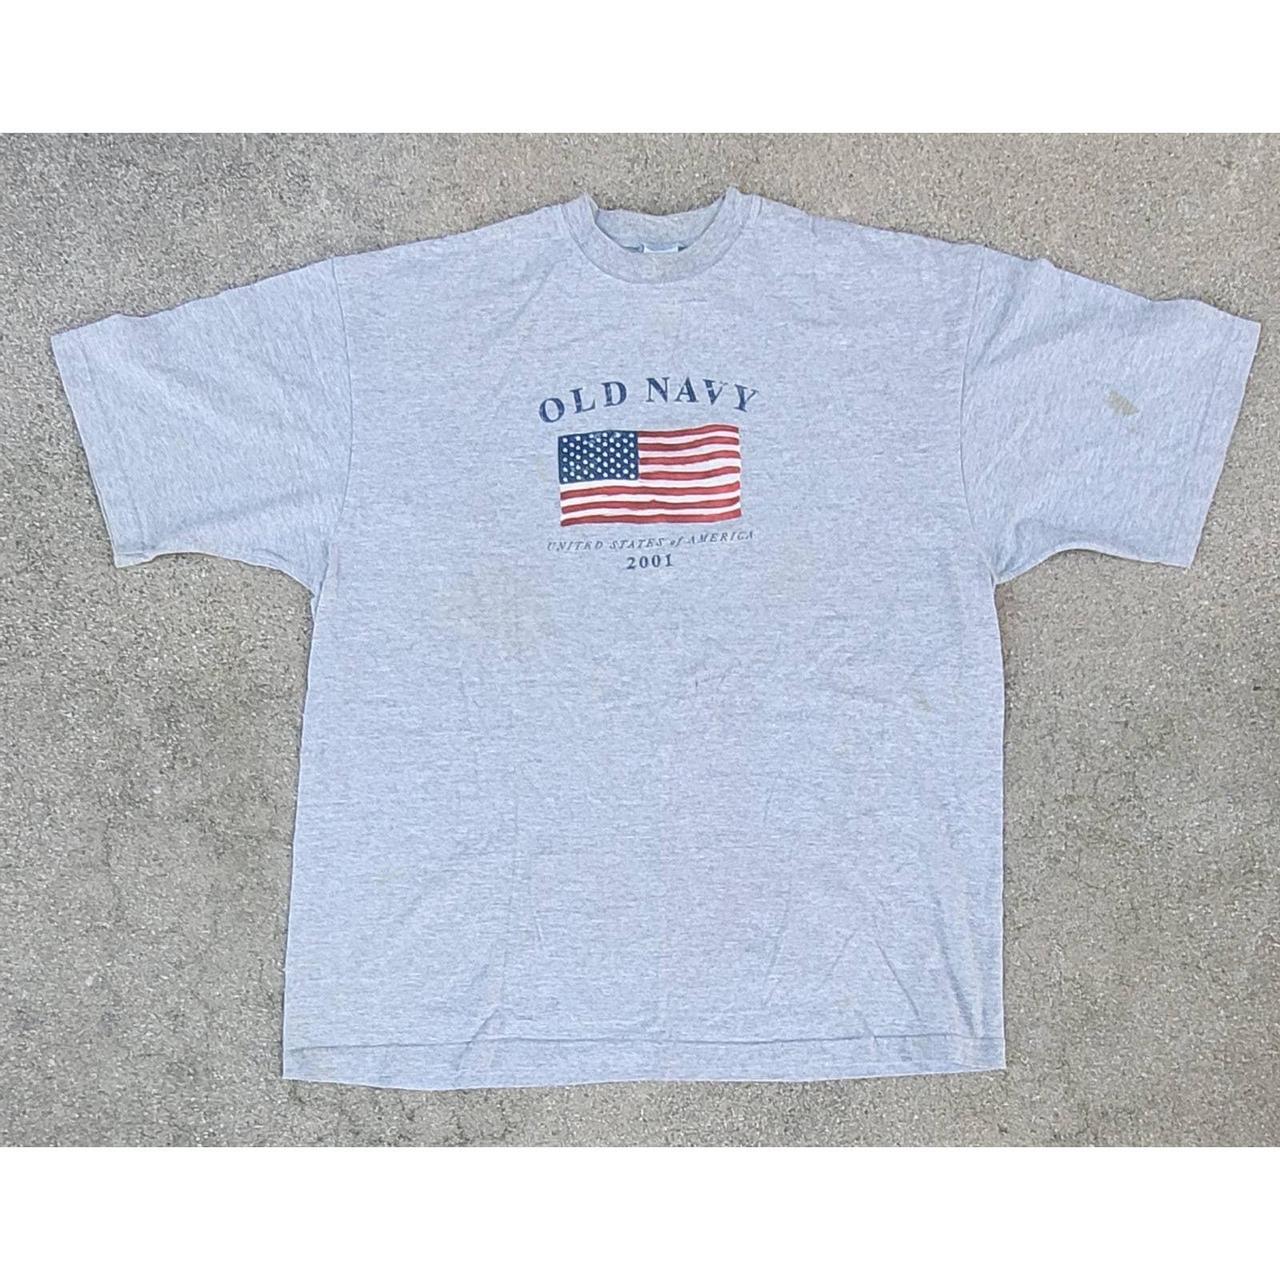 Vtg 2001 Old Navy USA American Flag T-shirt. Good